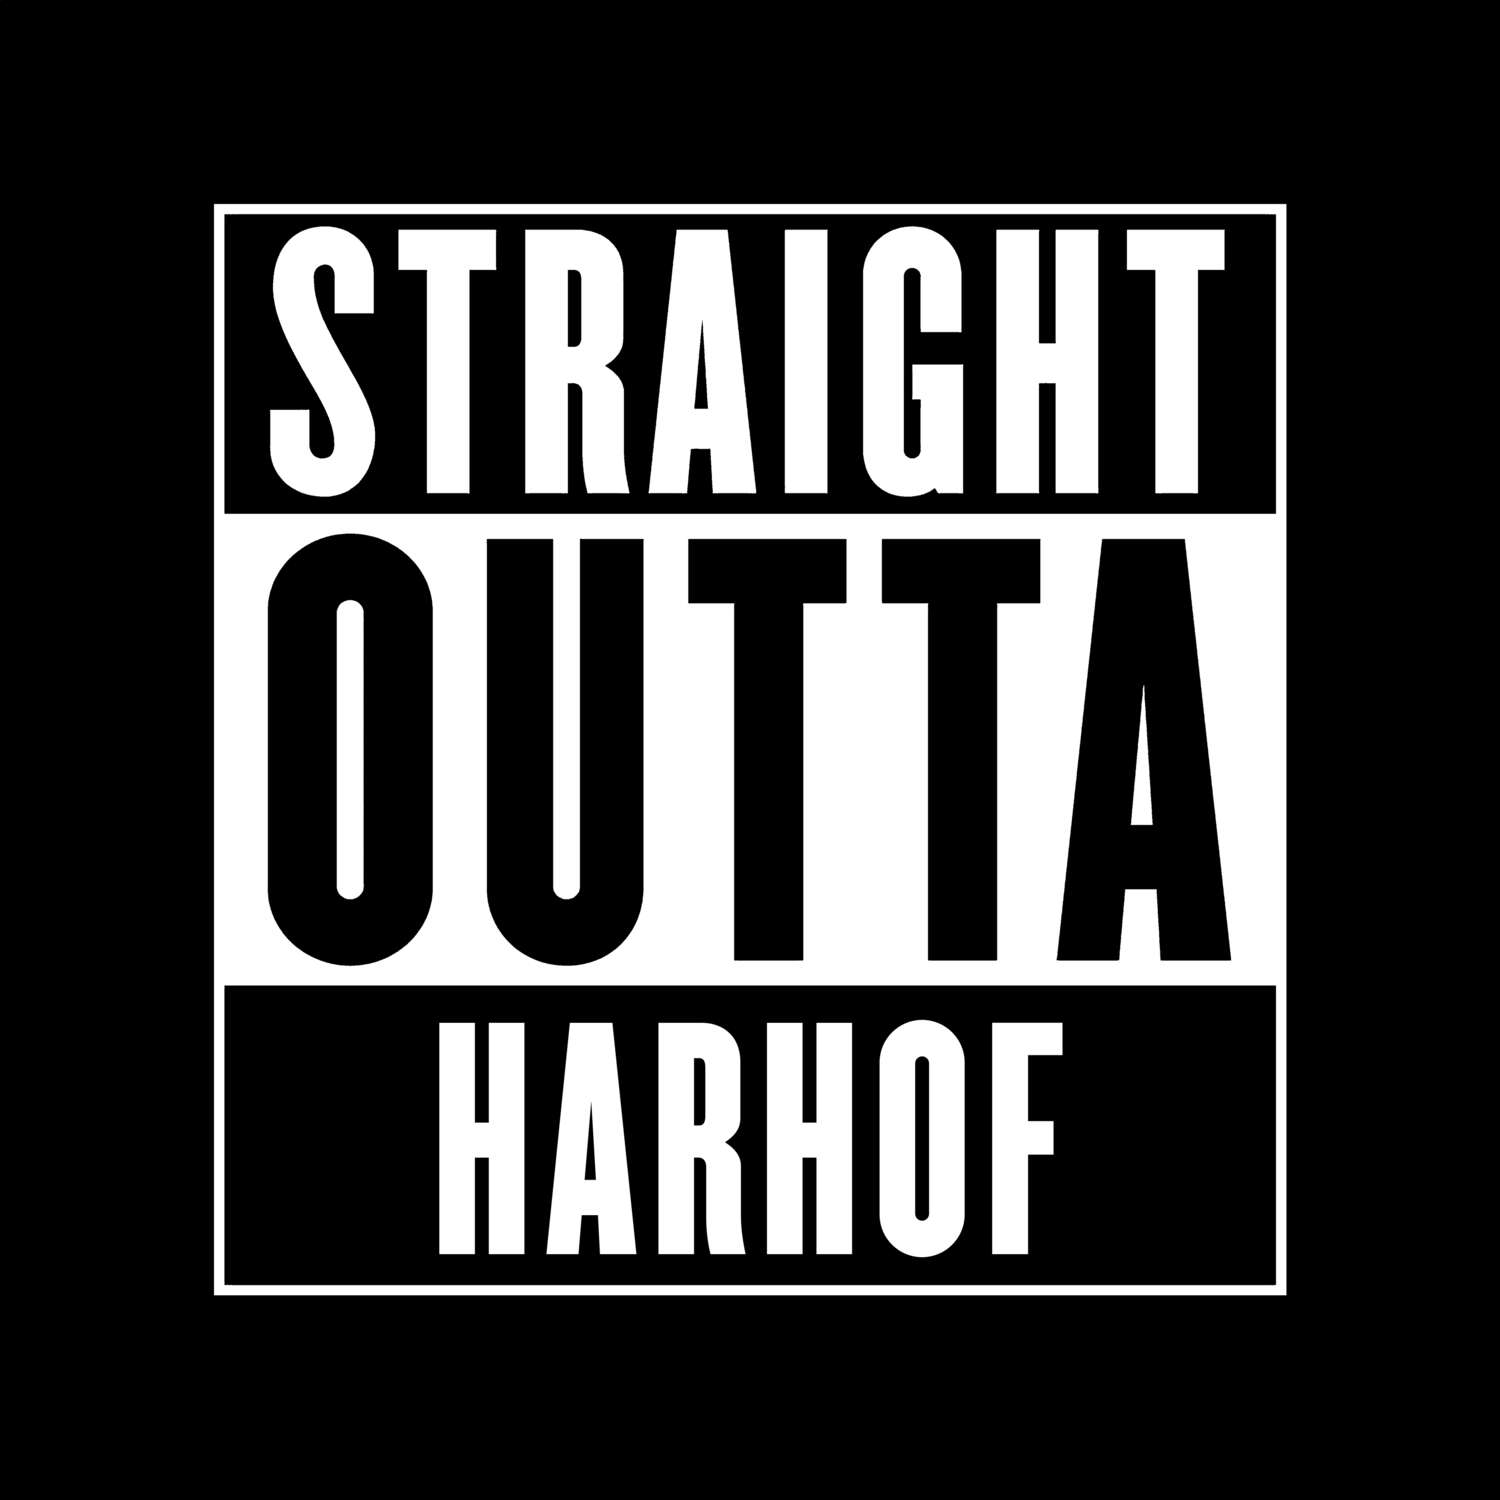 Harhof T-Shirt »Straight Outta«